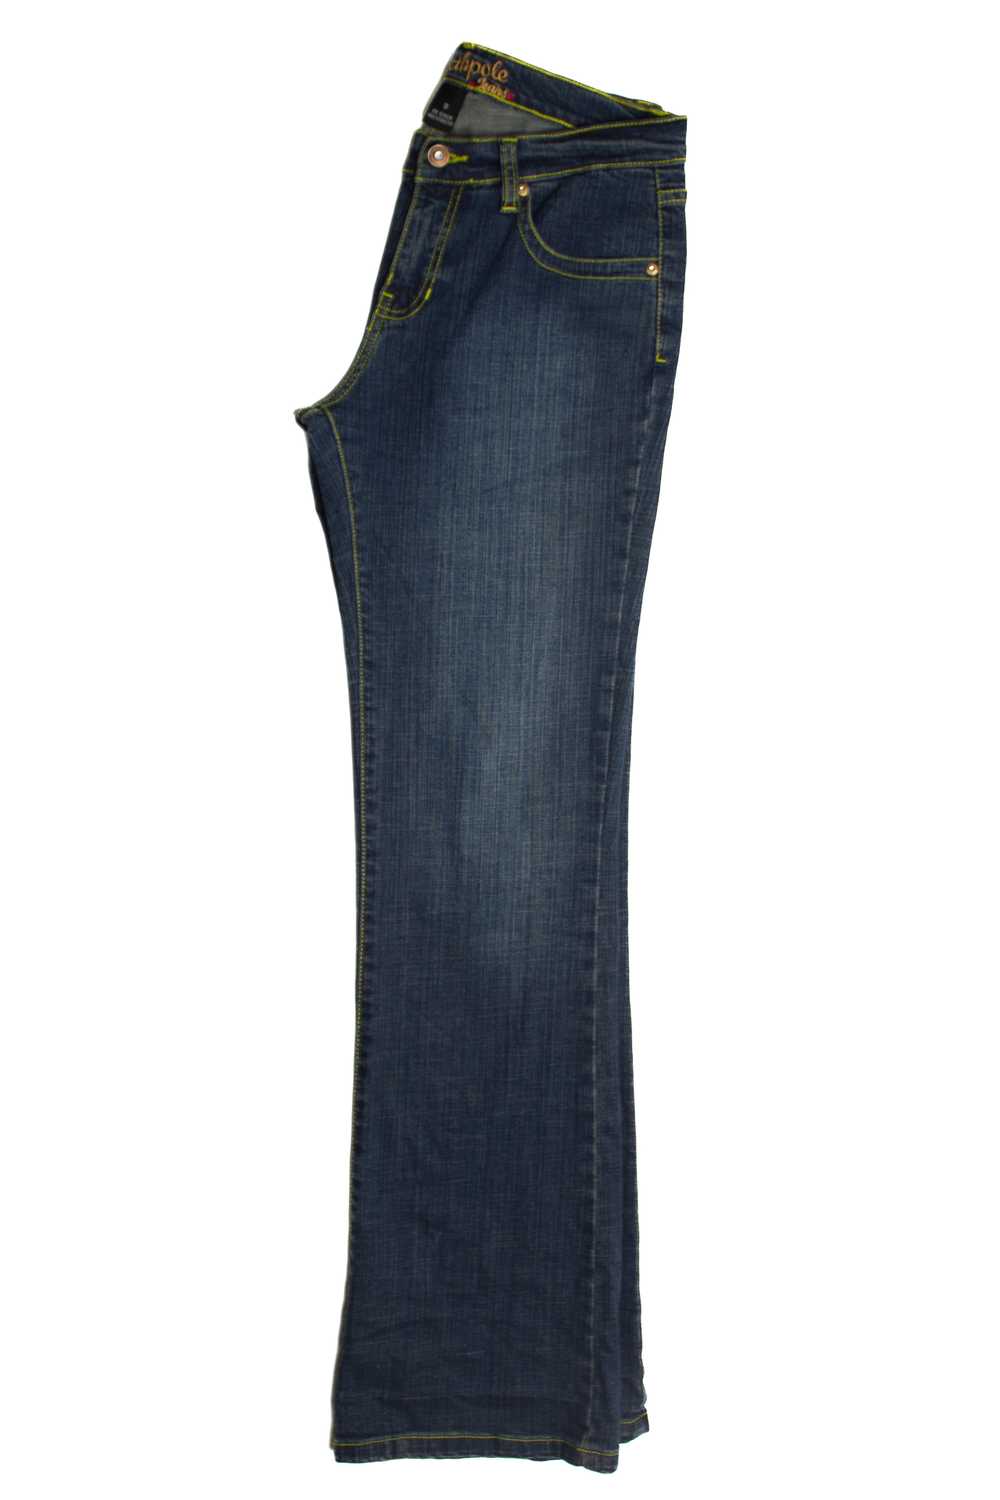 Y2k Contrast Stitch South Pole Denim Jeans 973 - image 2